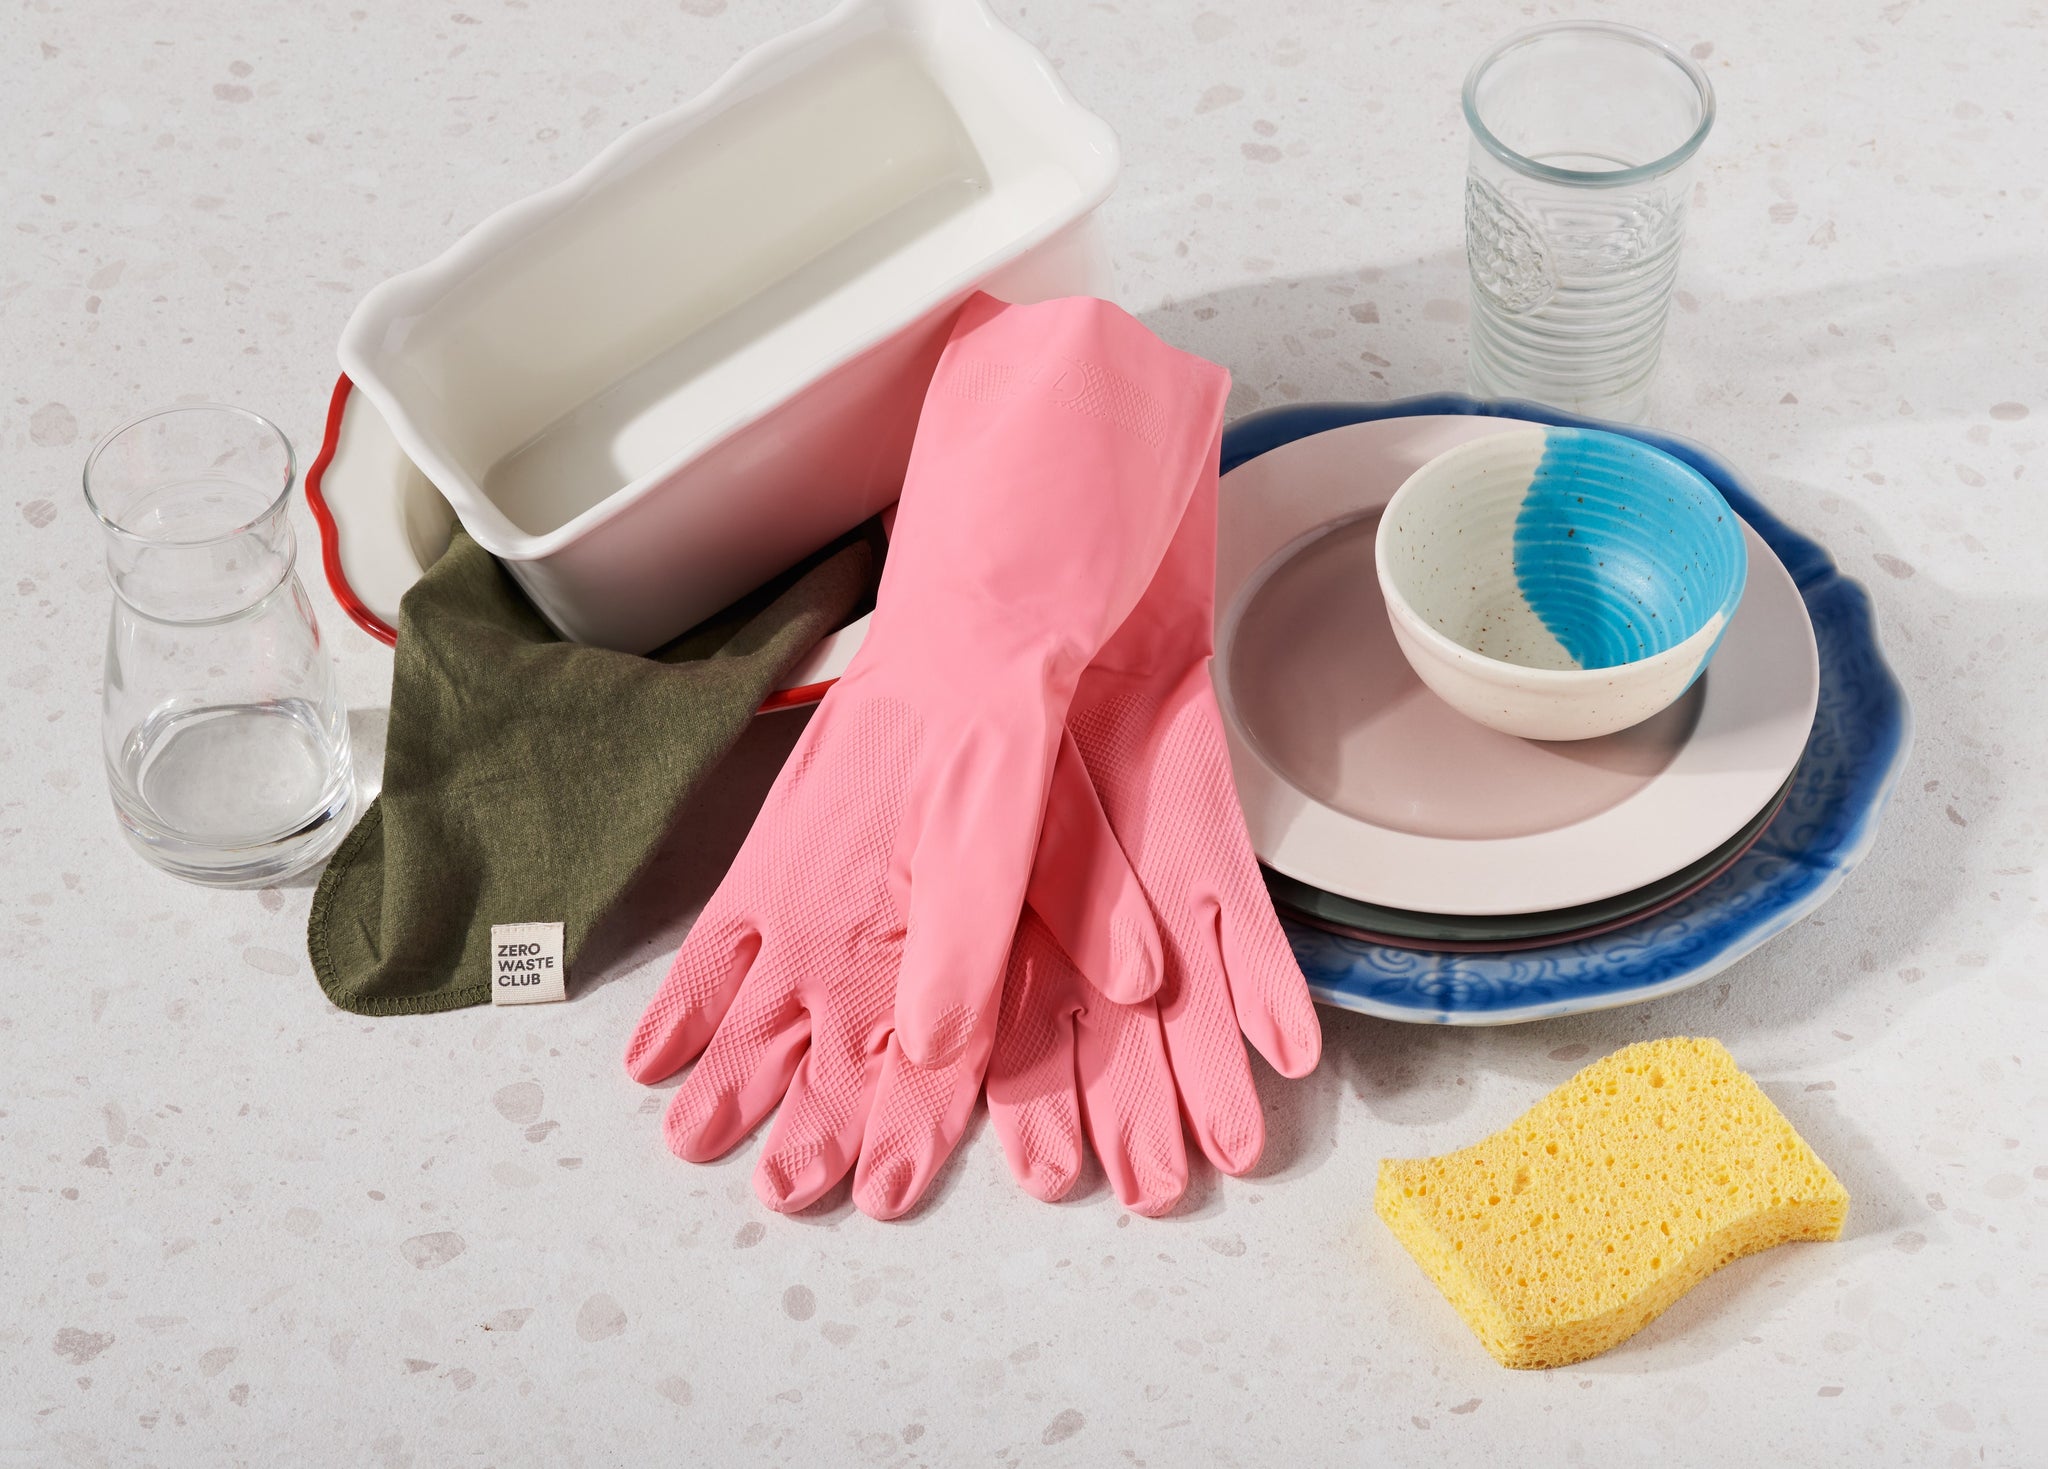 Natural Rubber Gloves for Household, Kitchen, Gardening